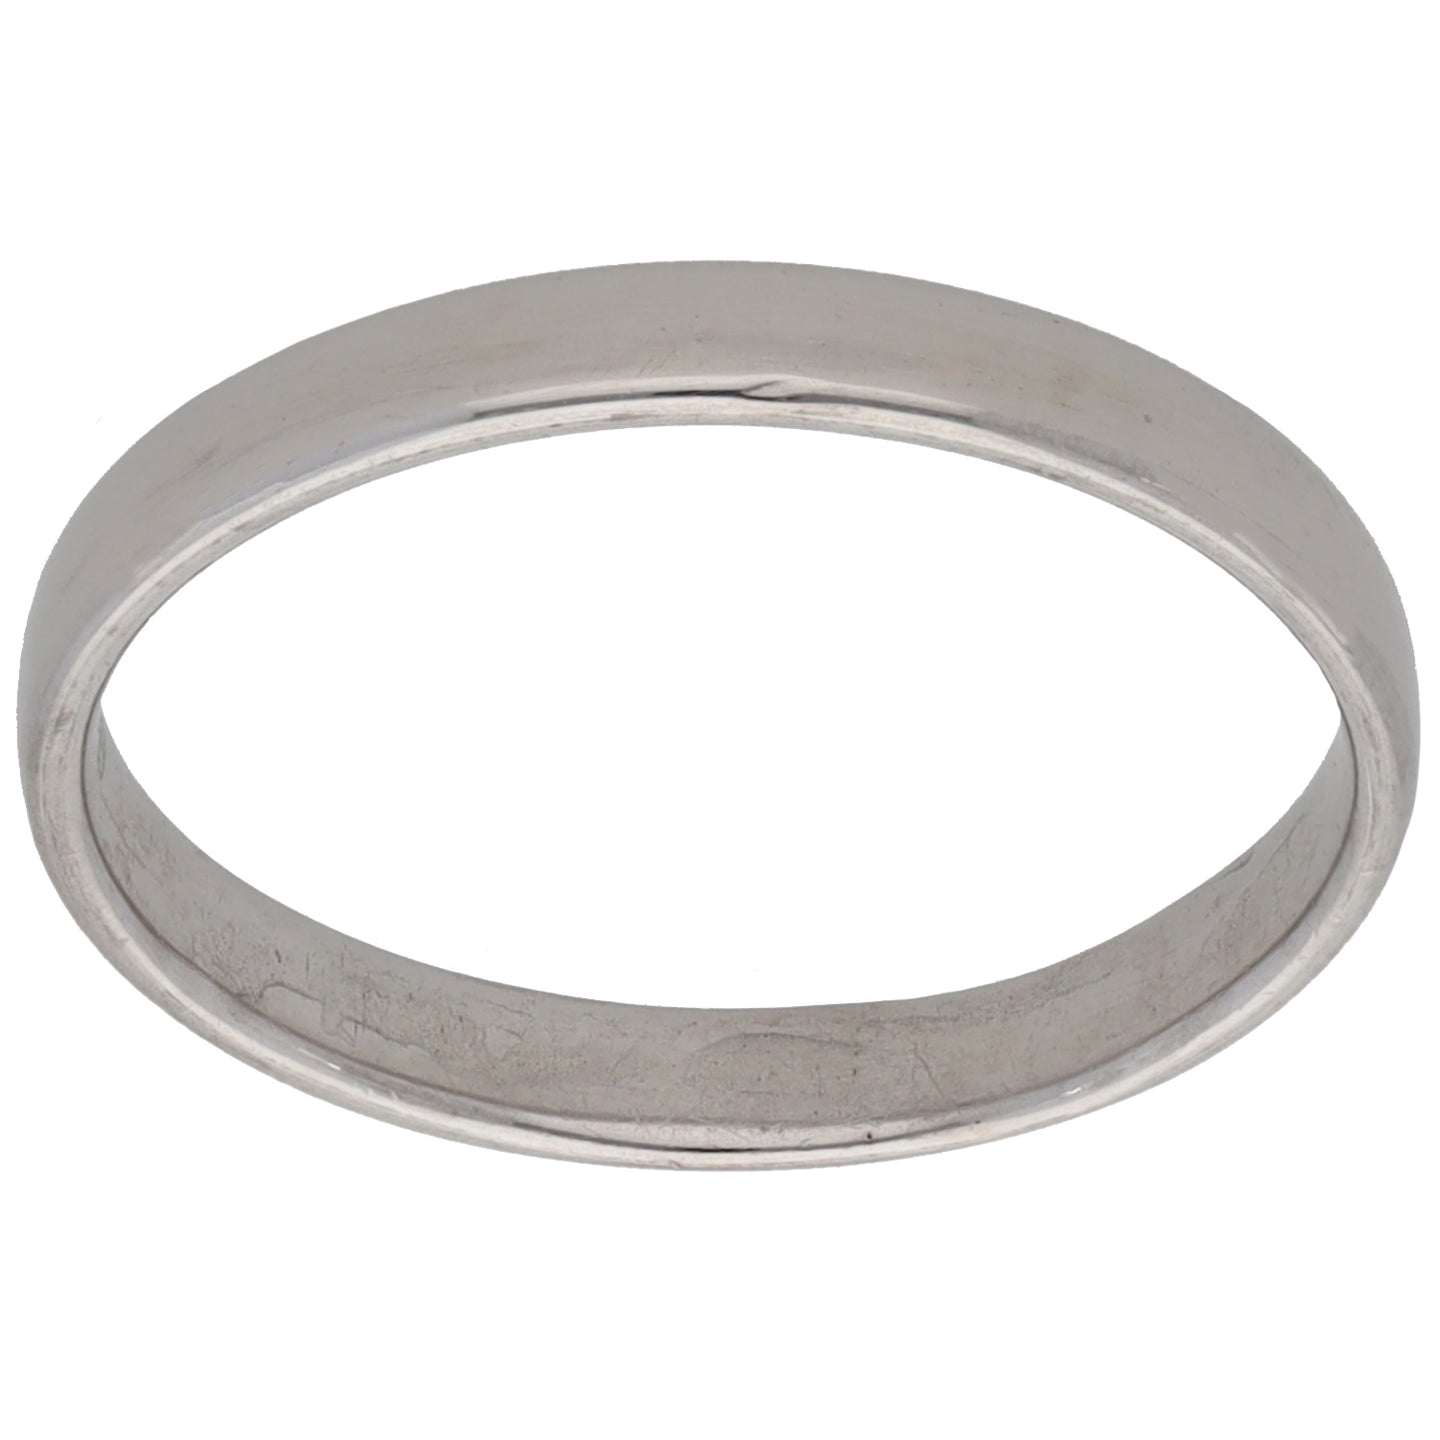 18ct White Gold Plain Wedding Ring Size L